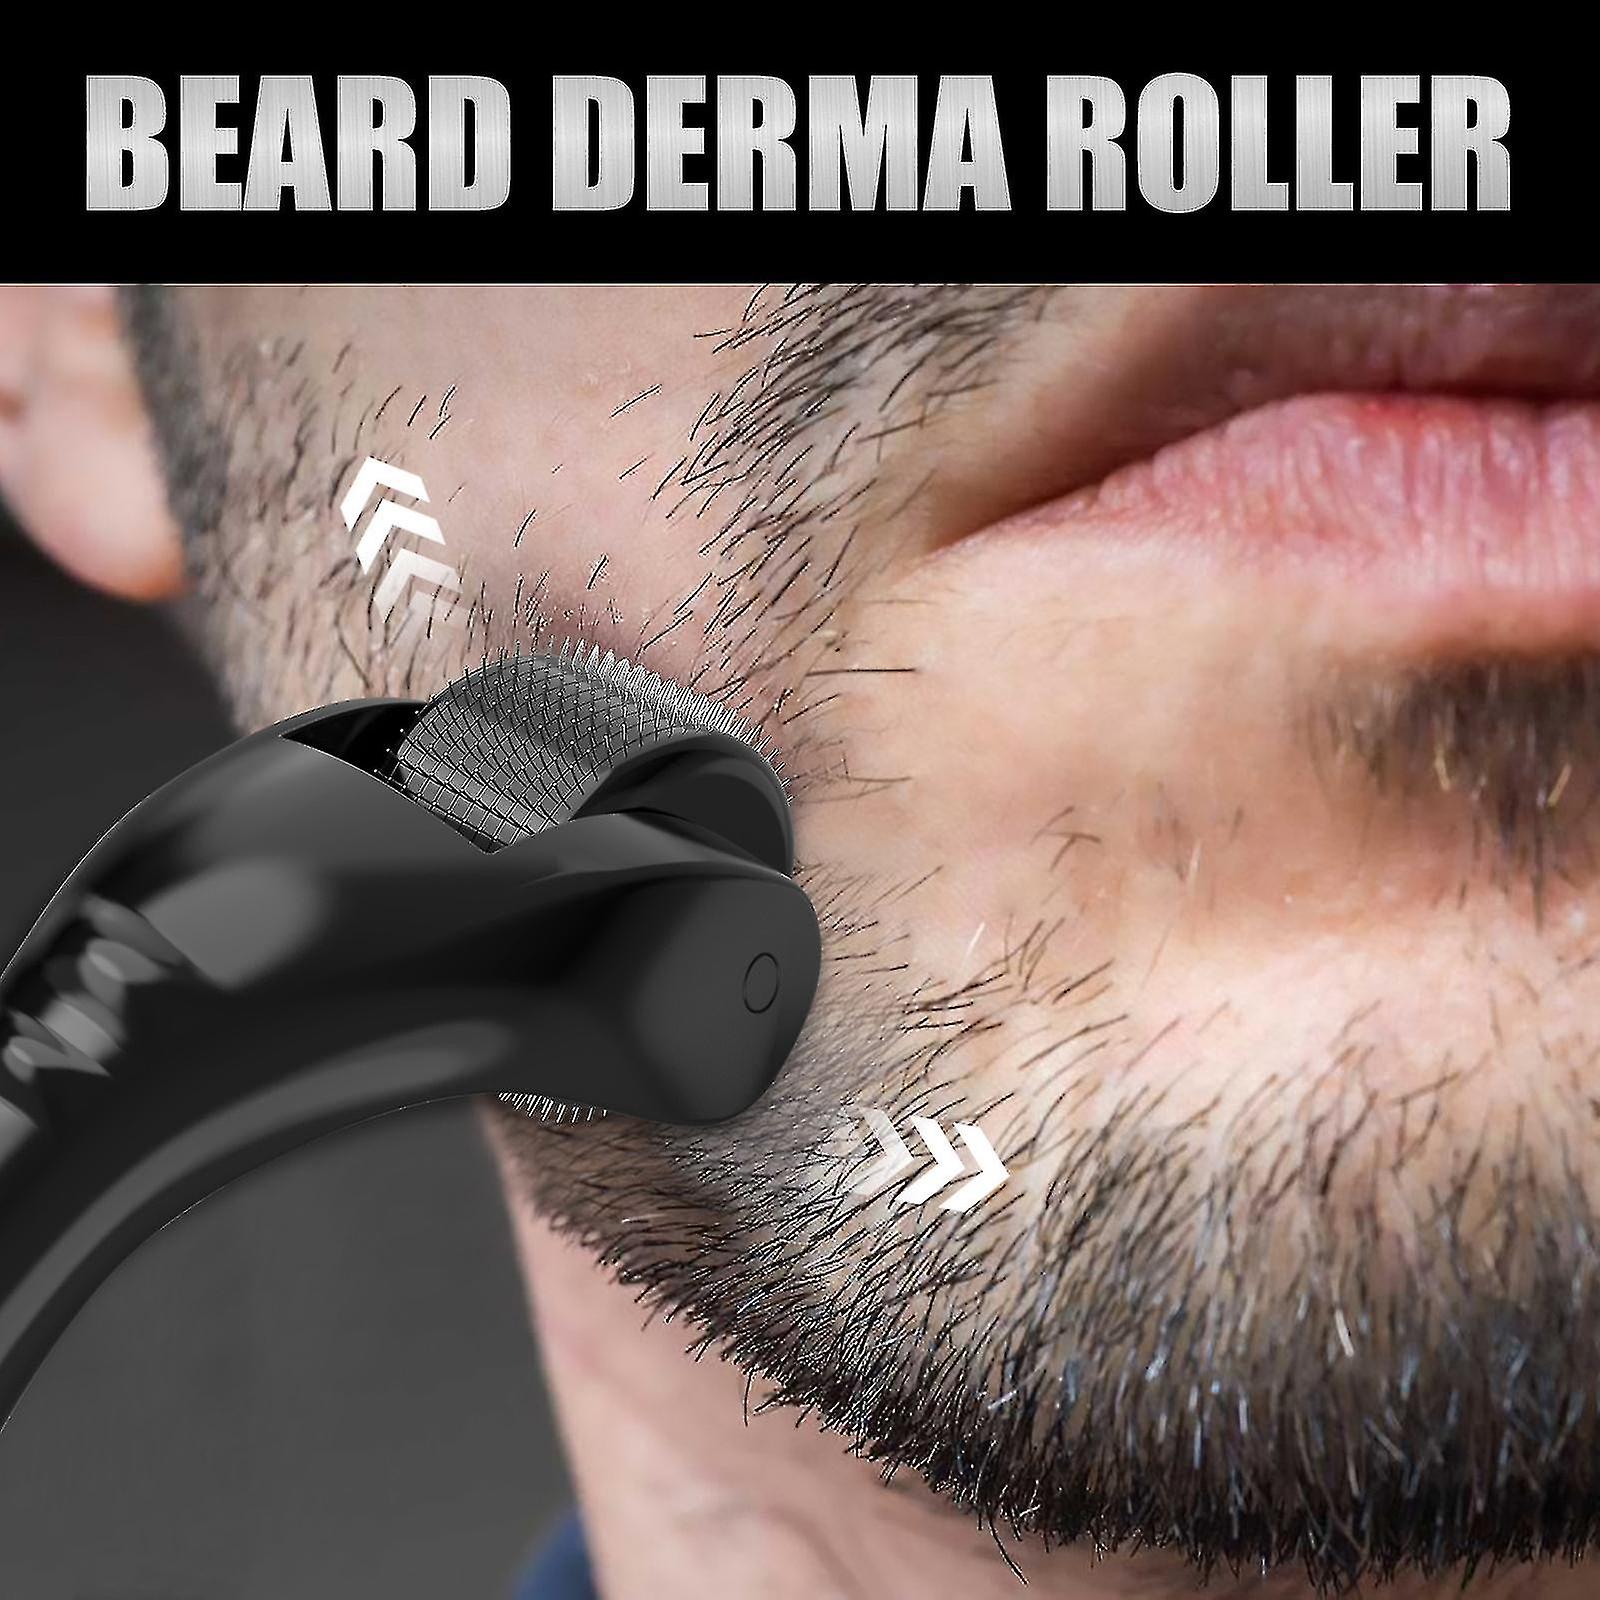 Beard Derma Roller